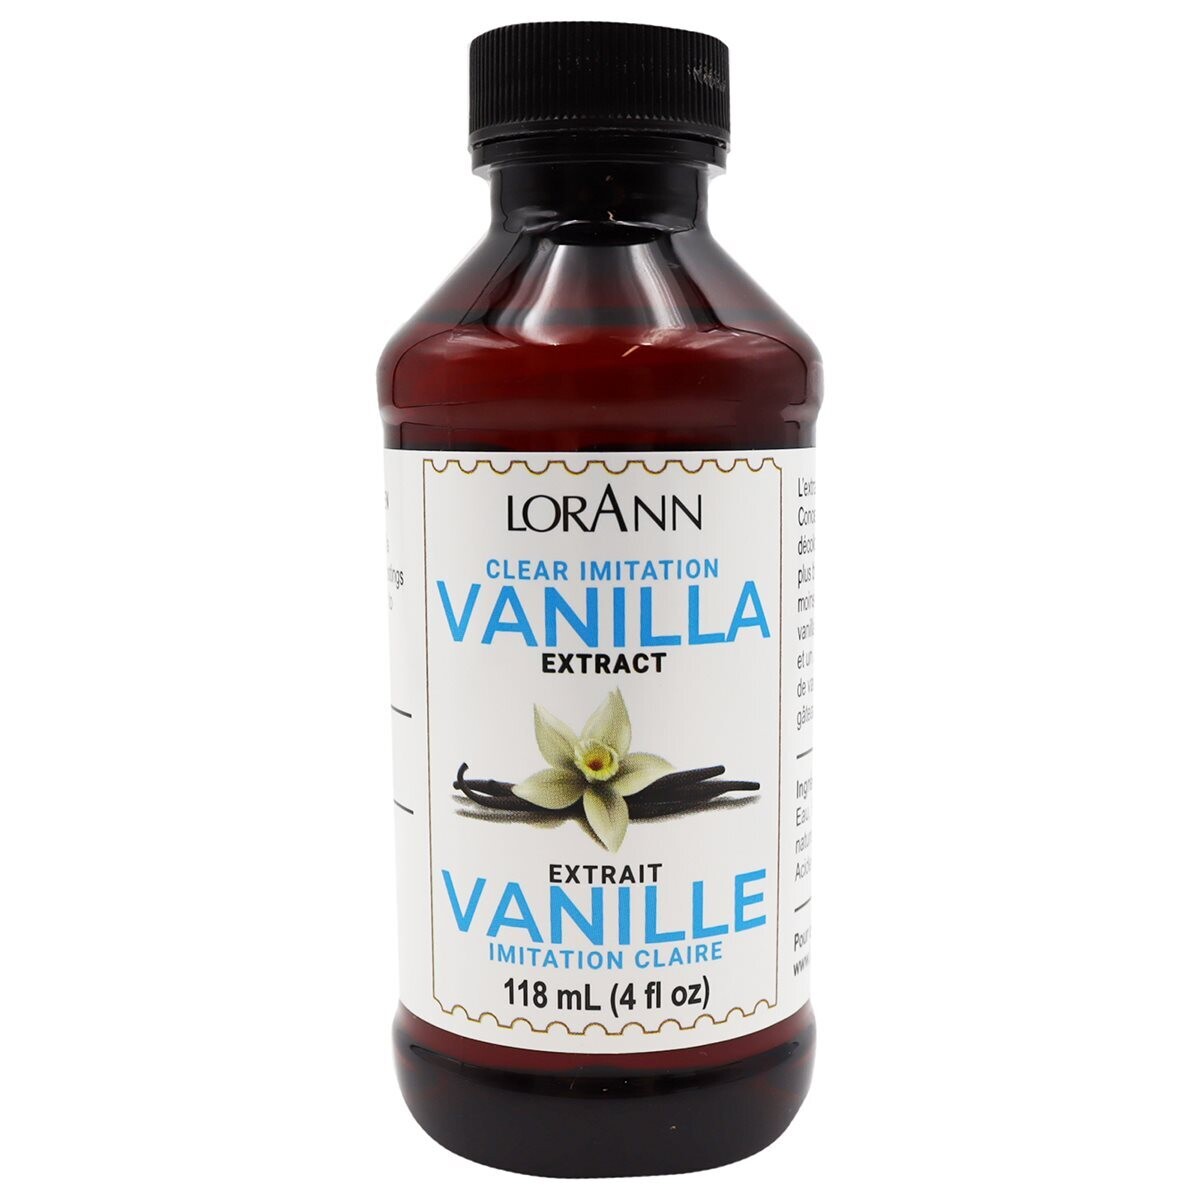 Lorann Clear Imitation Vanilla Extract, 4oz.